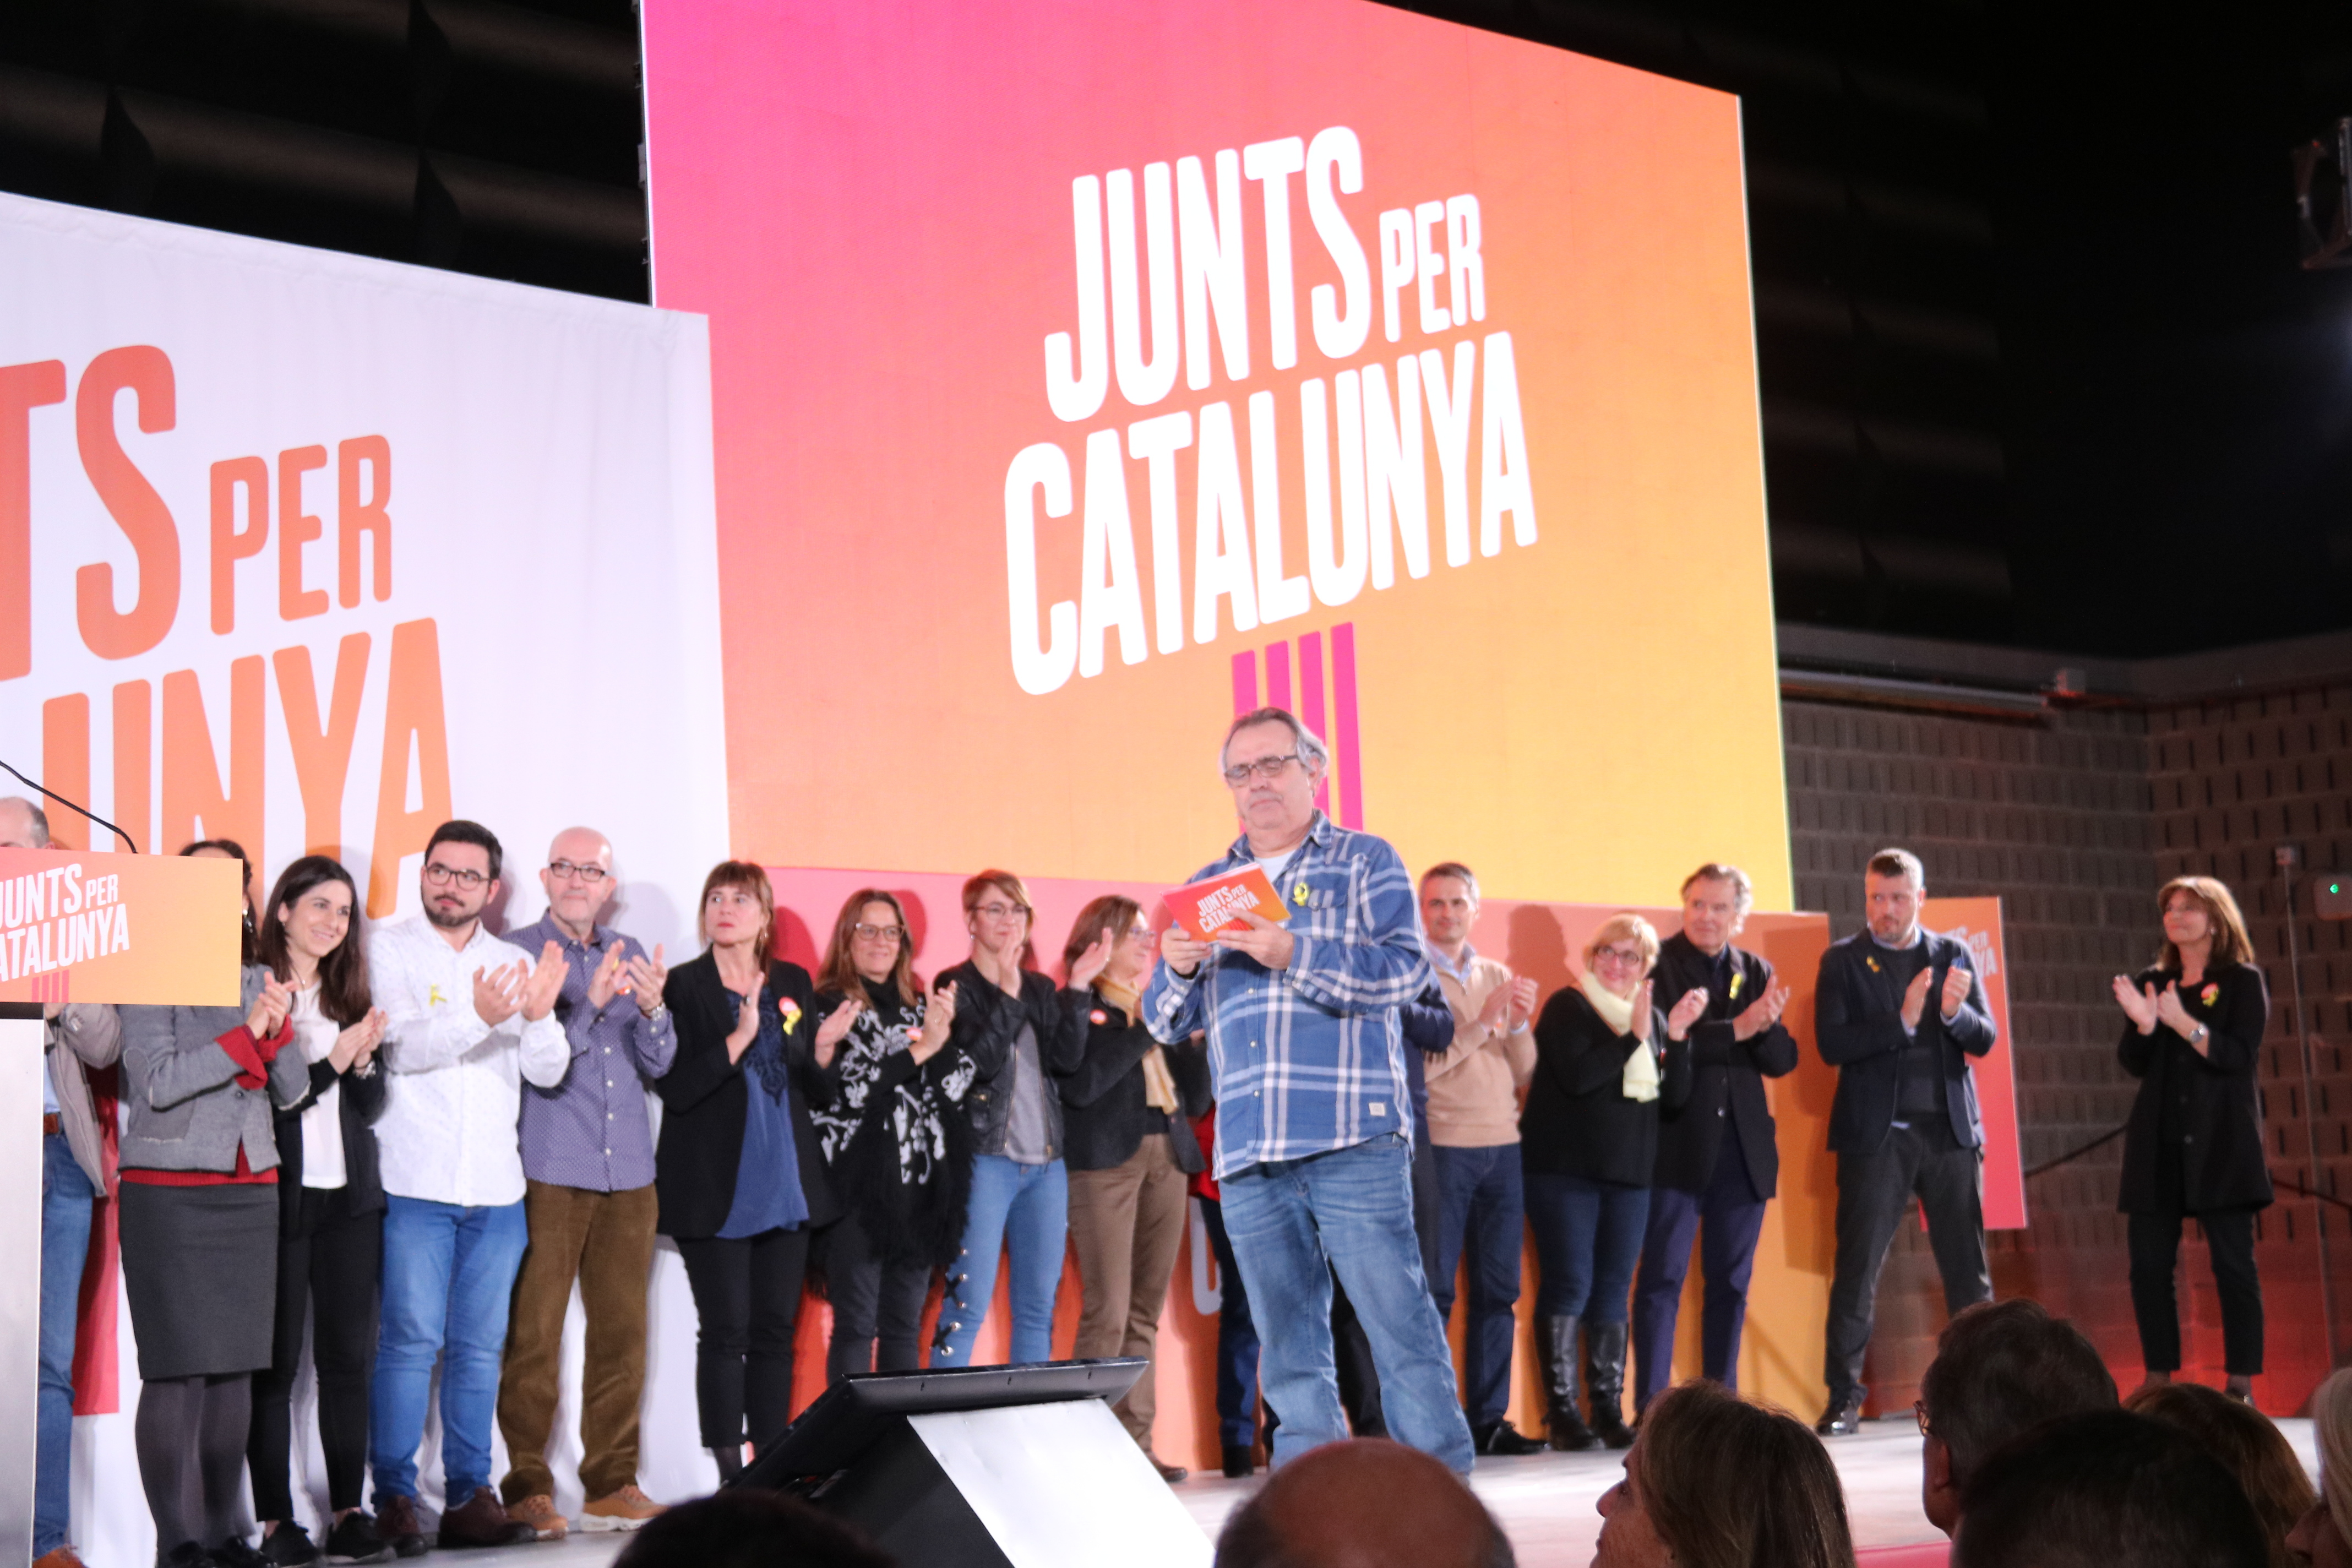 Together for Catalonia event on Monday evening (by Bernat Vilaró)